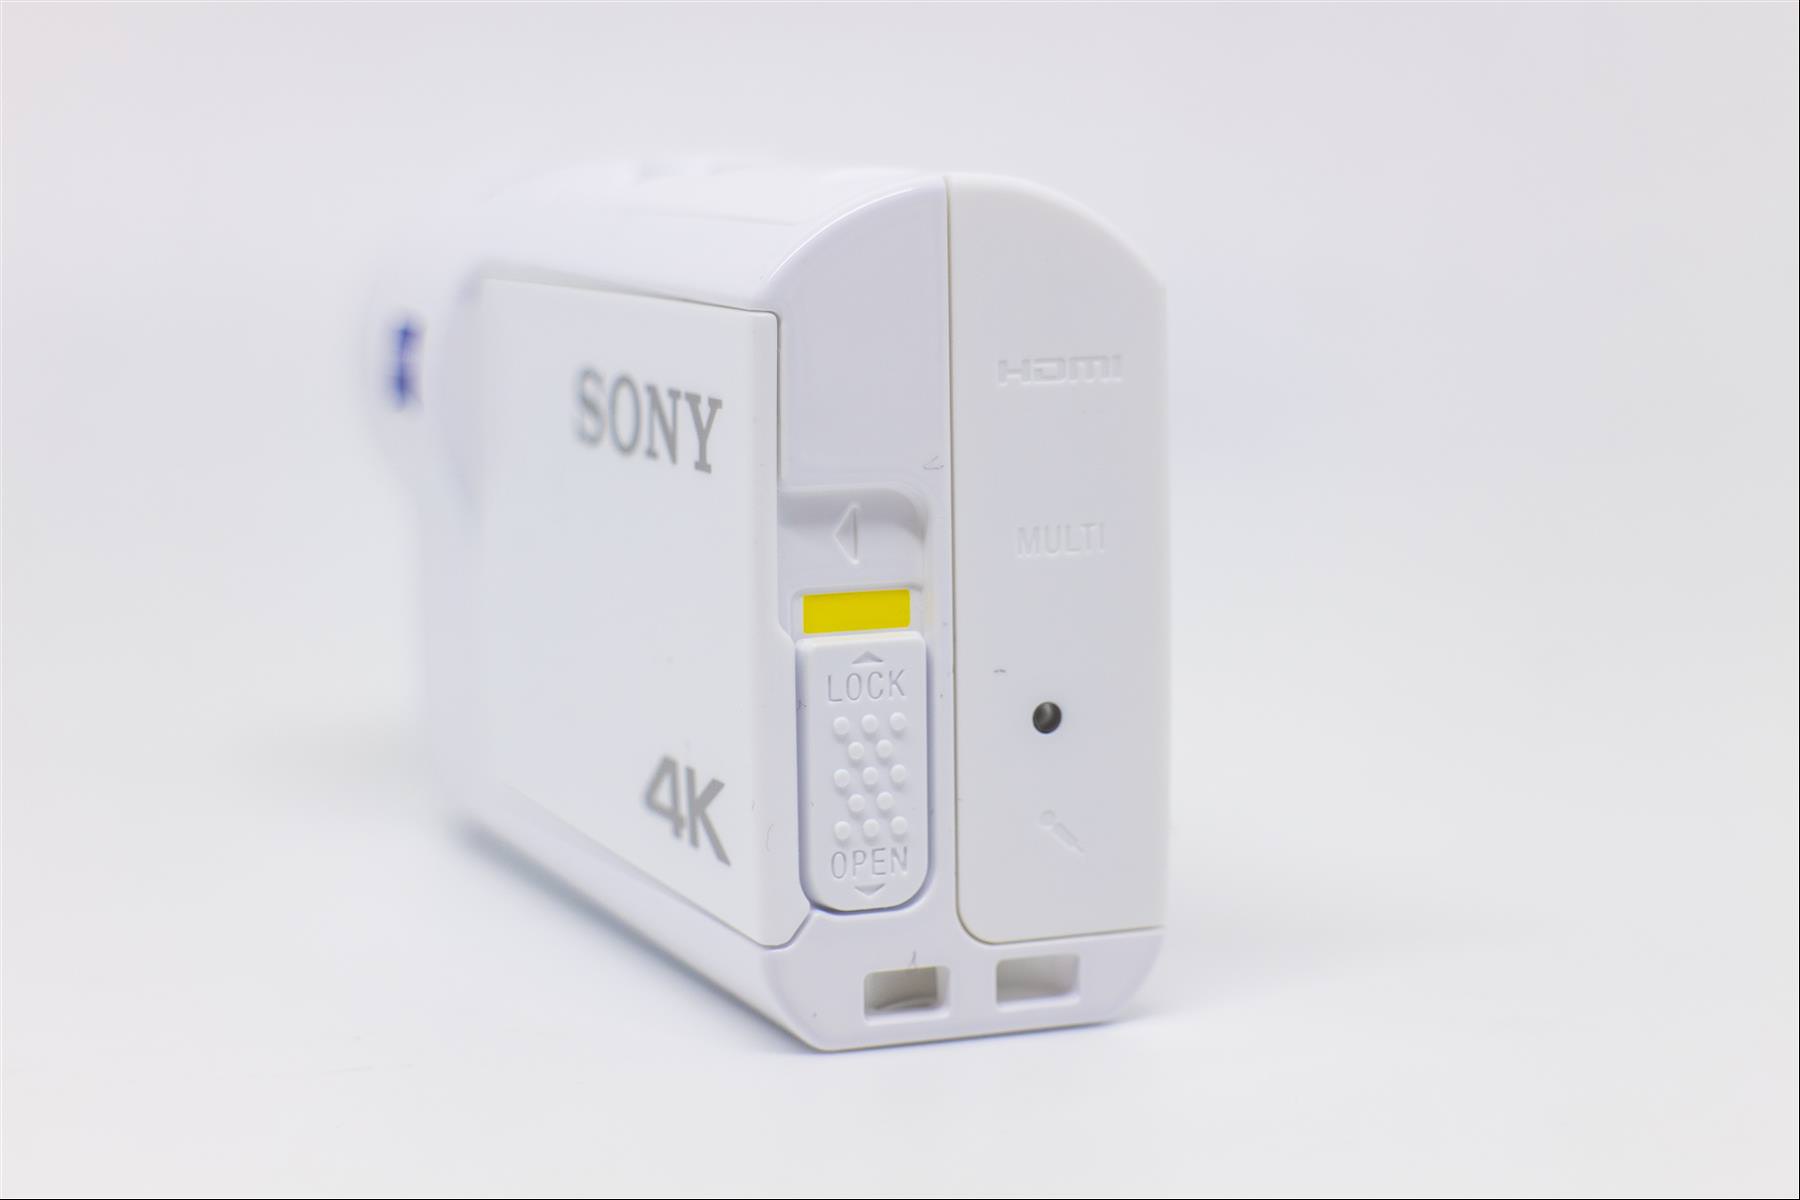 比攝影73] Sony FDR-X3000 - 4K Action Cam 超強防手震4K 運動攝影機 